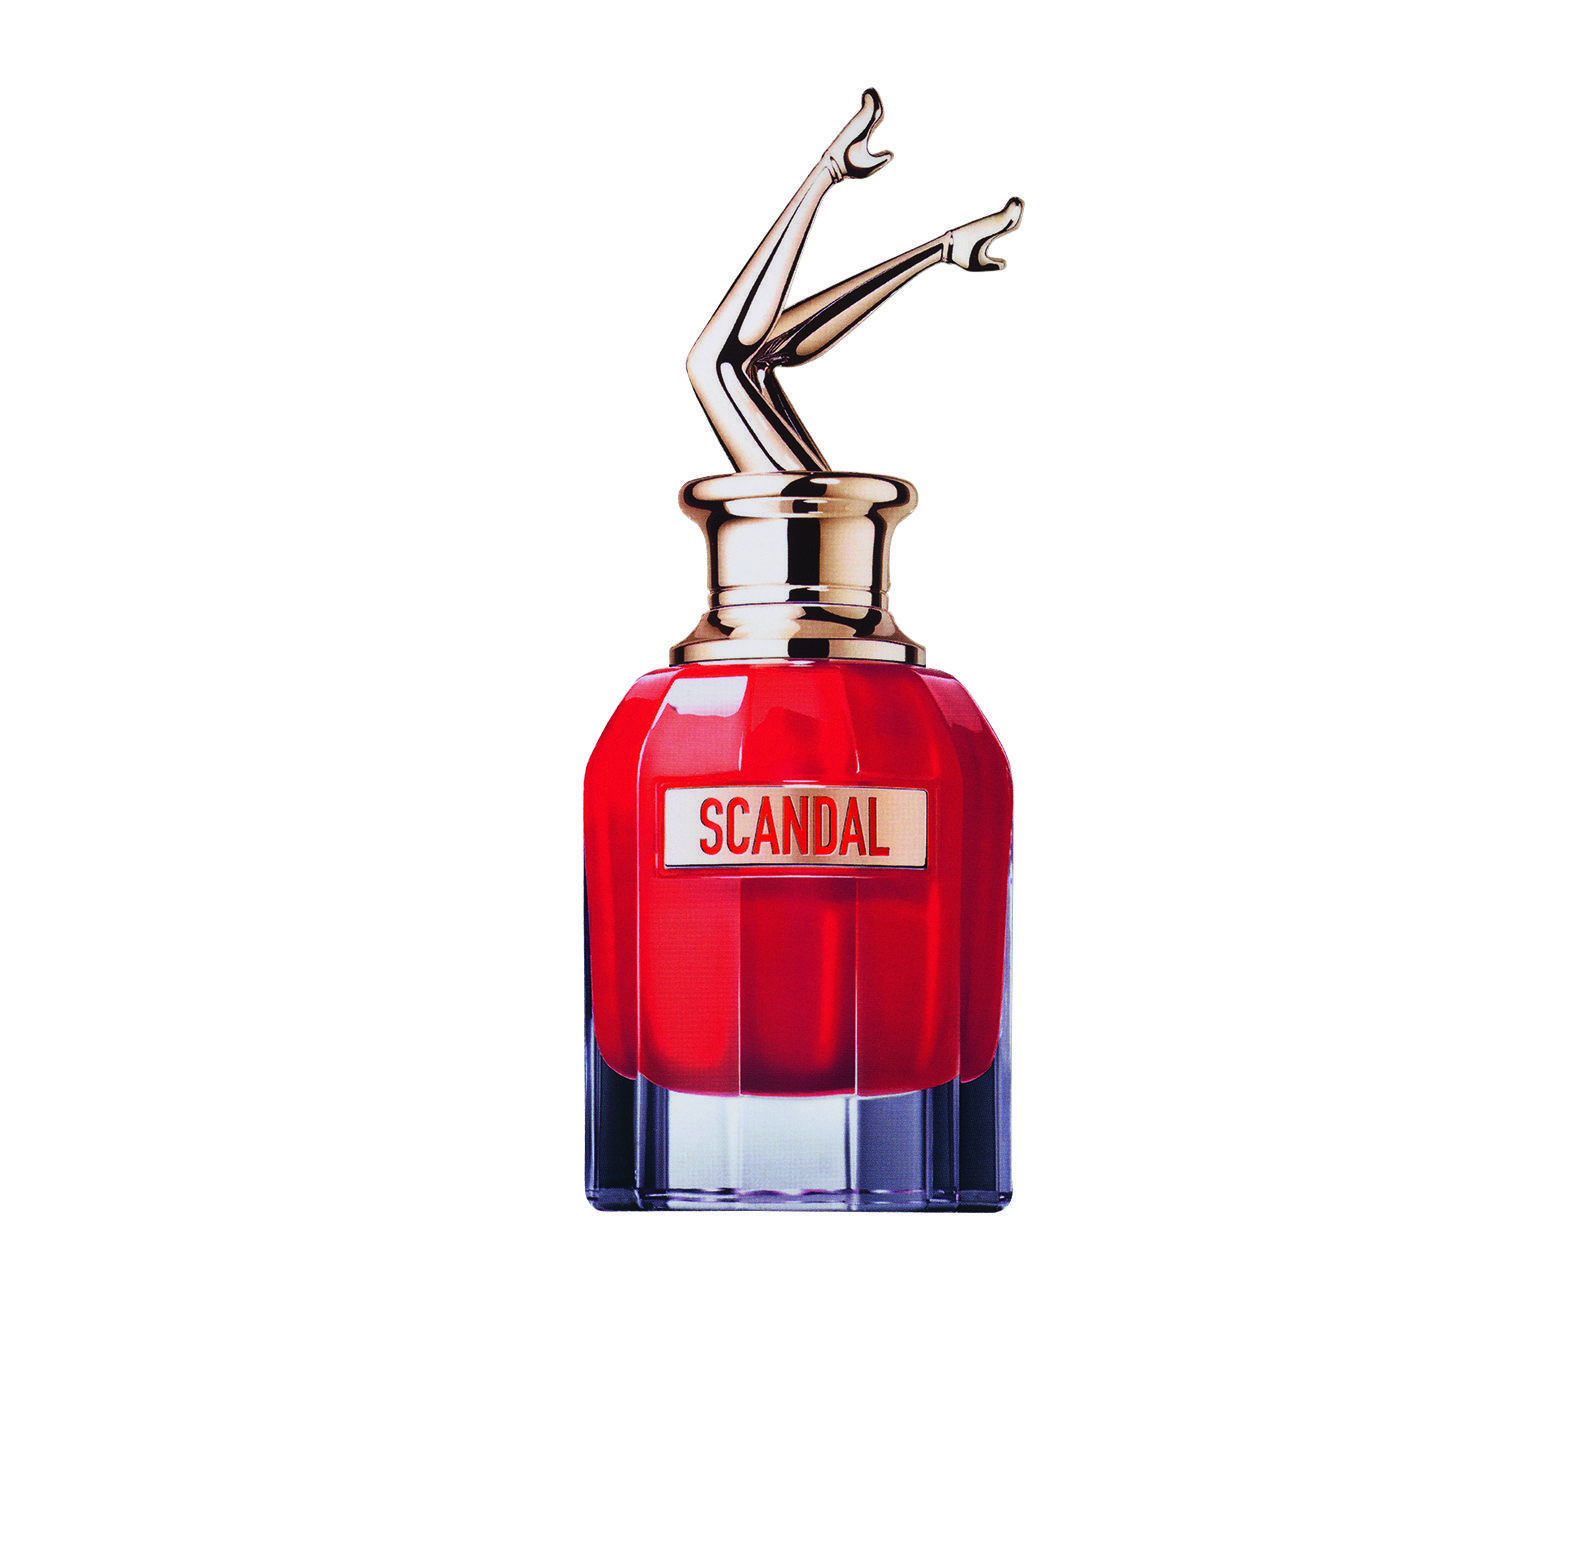 Jean Paul Gaultier Scandal Les Parfums: para ella y para él